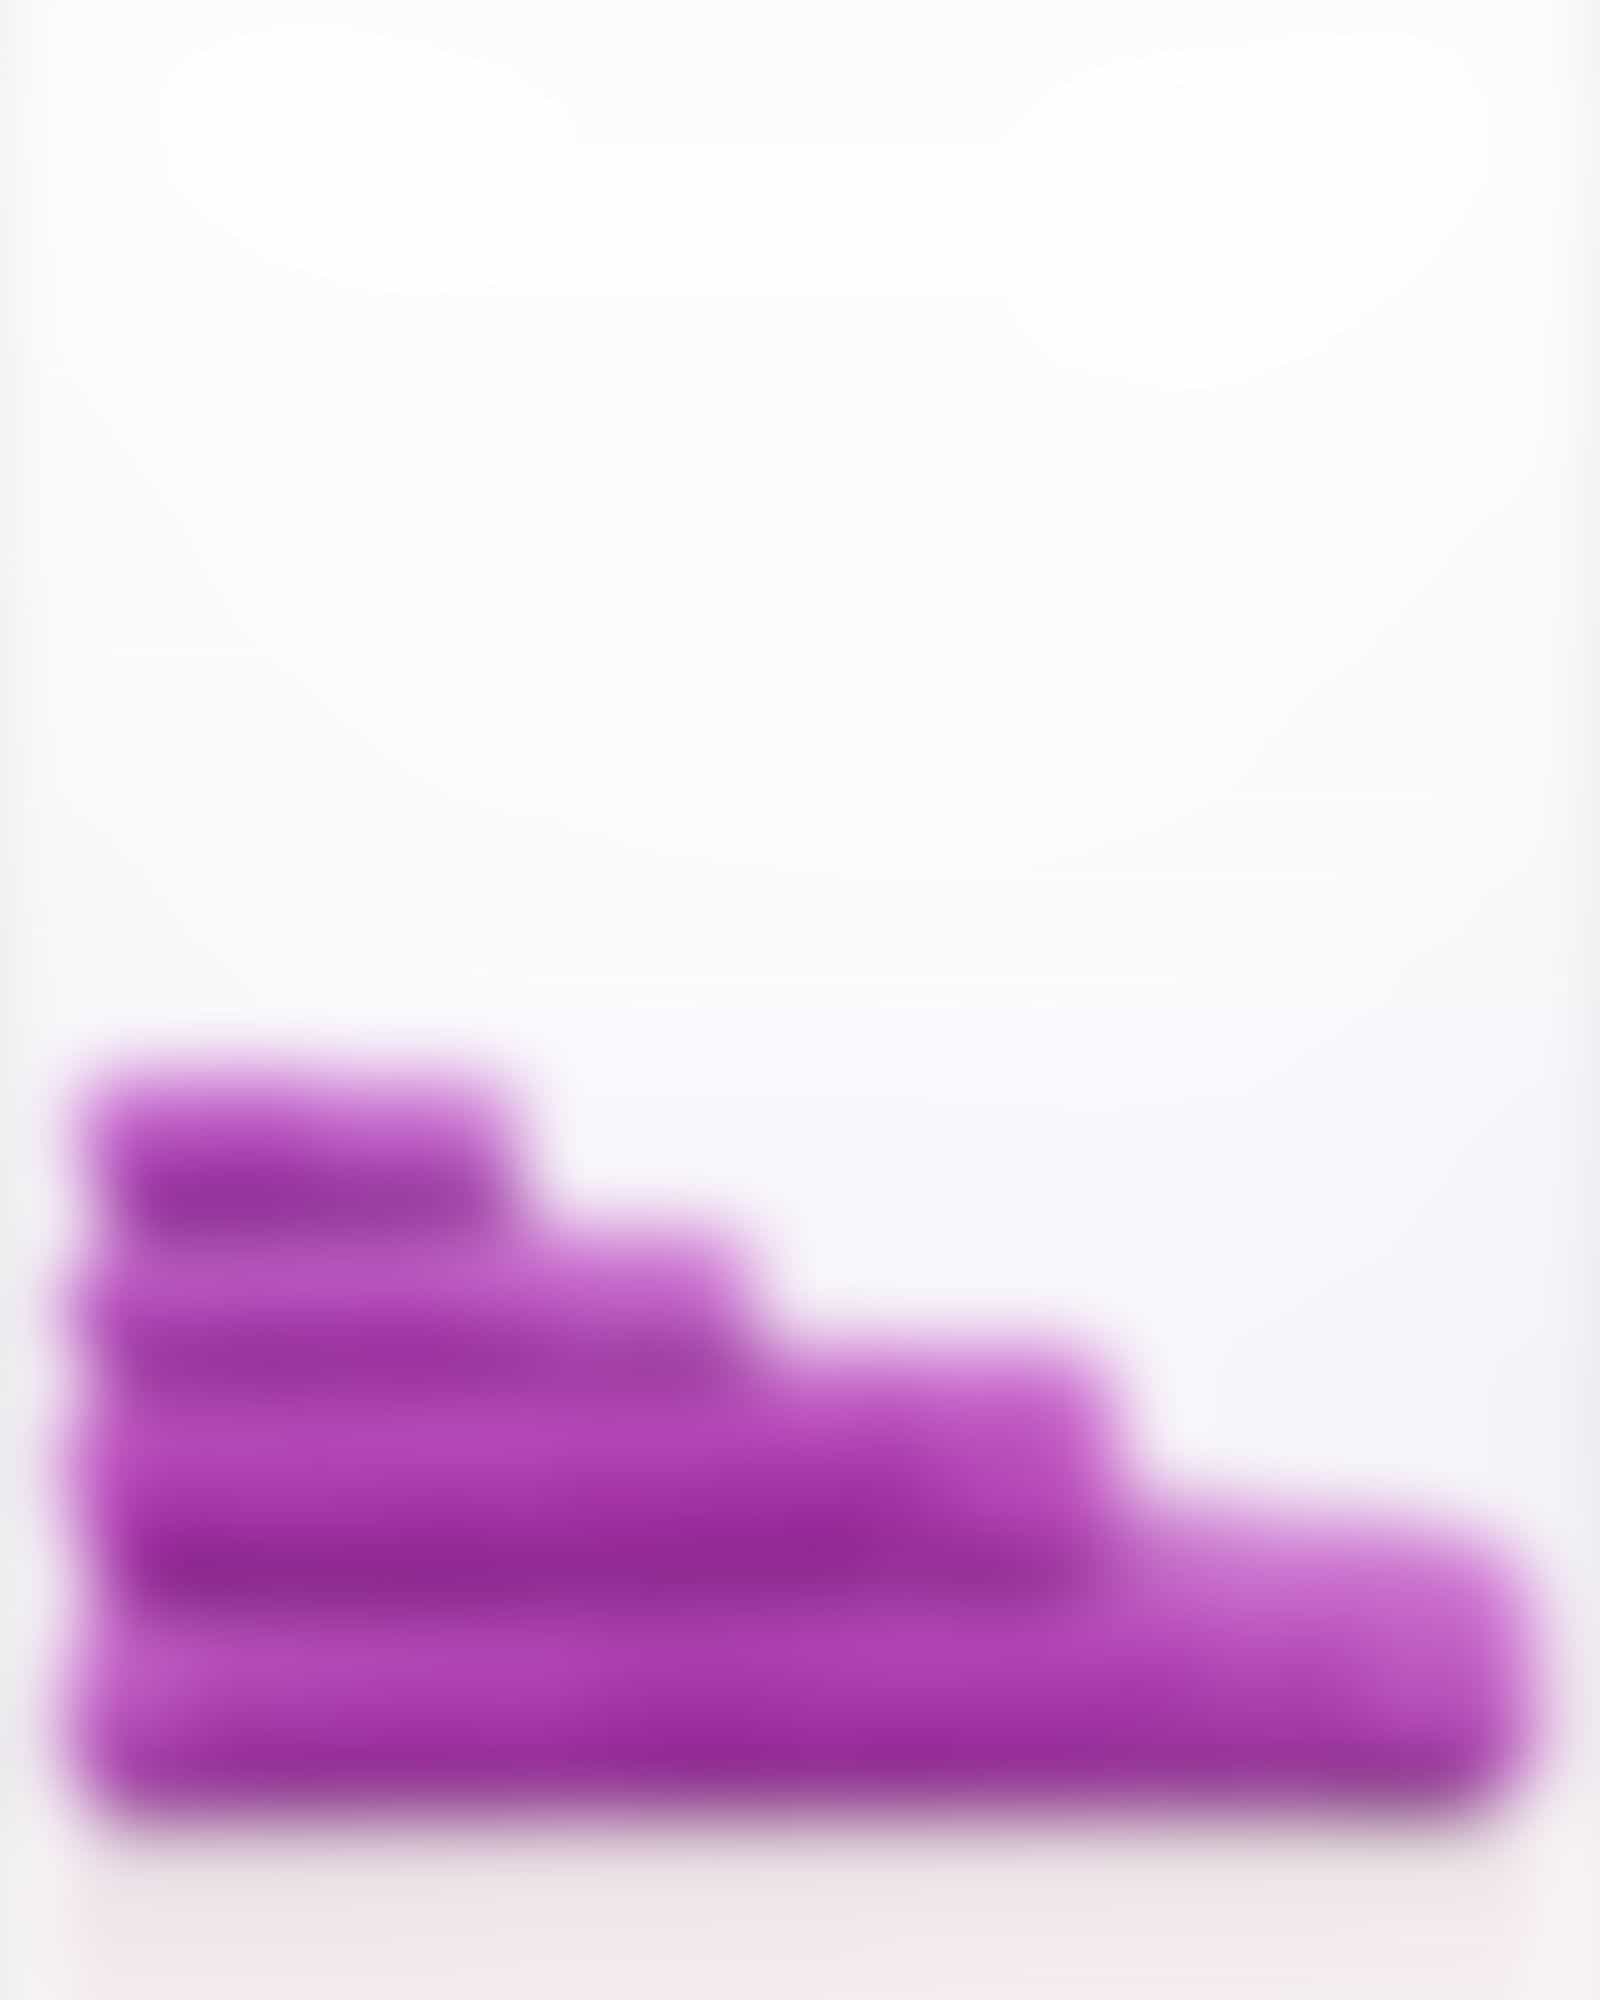 Vossen Handtücher Calypso Feeling - Farbe: lollipop - 8460 - Waschhandschuh 16x22 cm